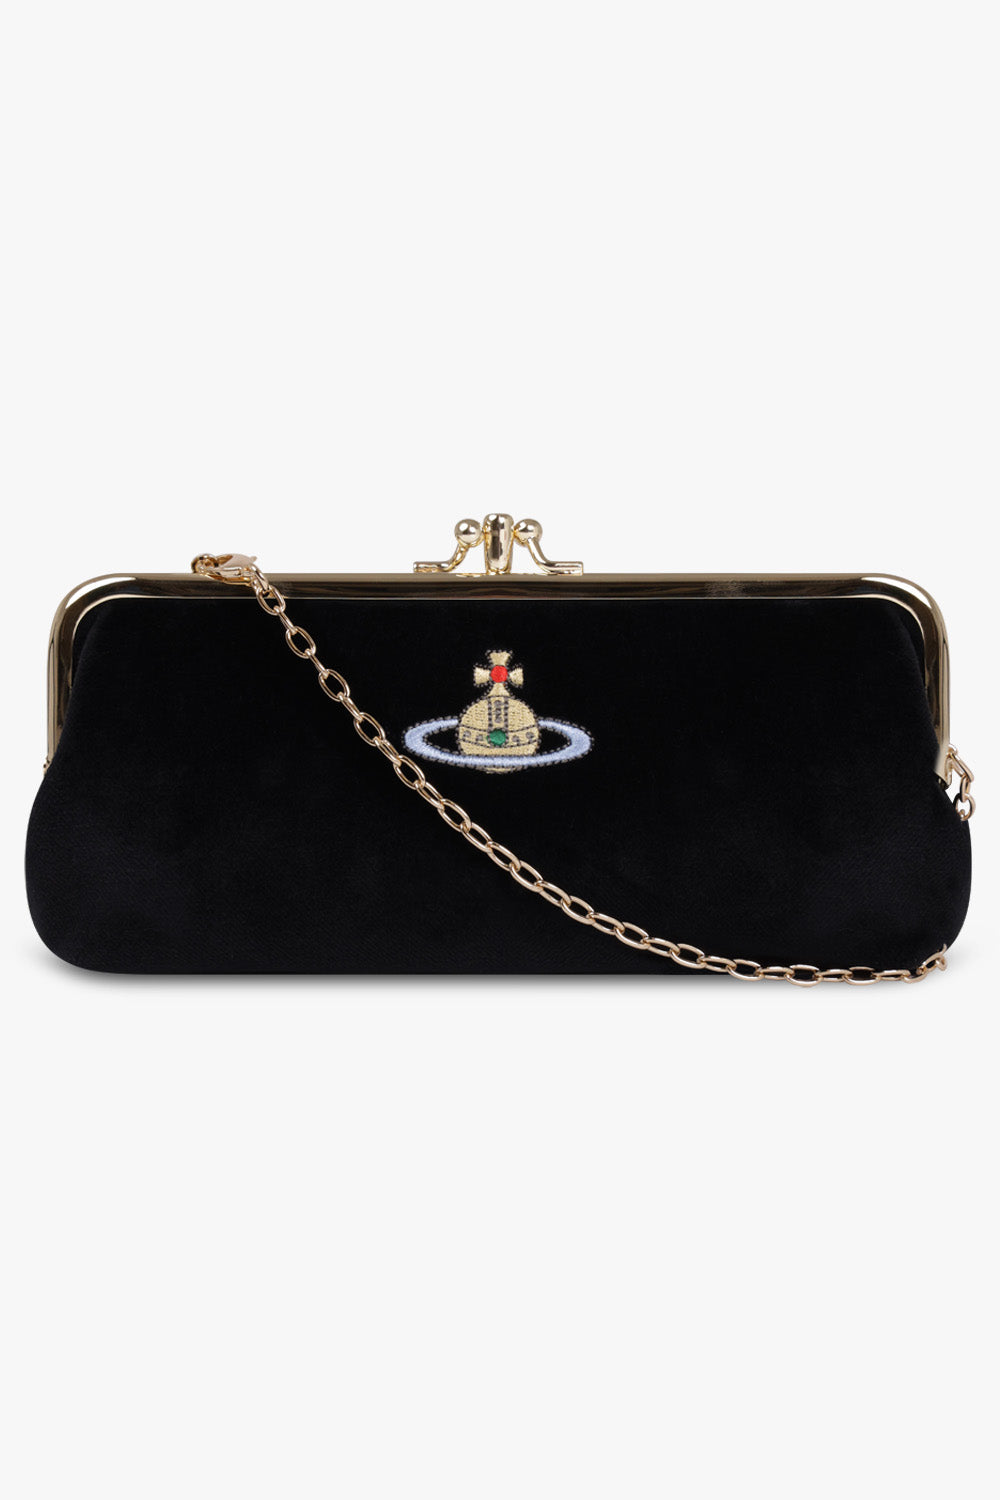 Vivienne Westwood Women's Grain Leather Purse Wallet W/ Coins Pocket Black  | eBay